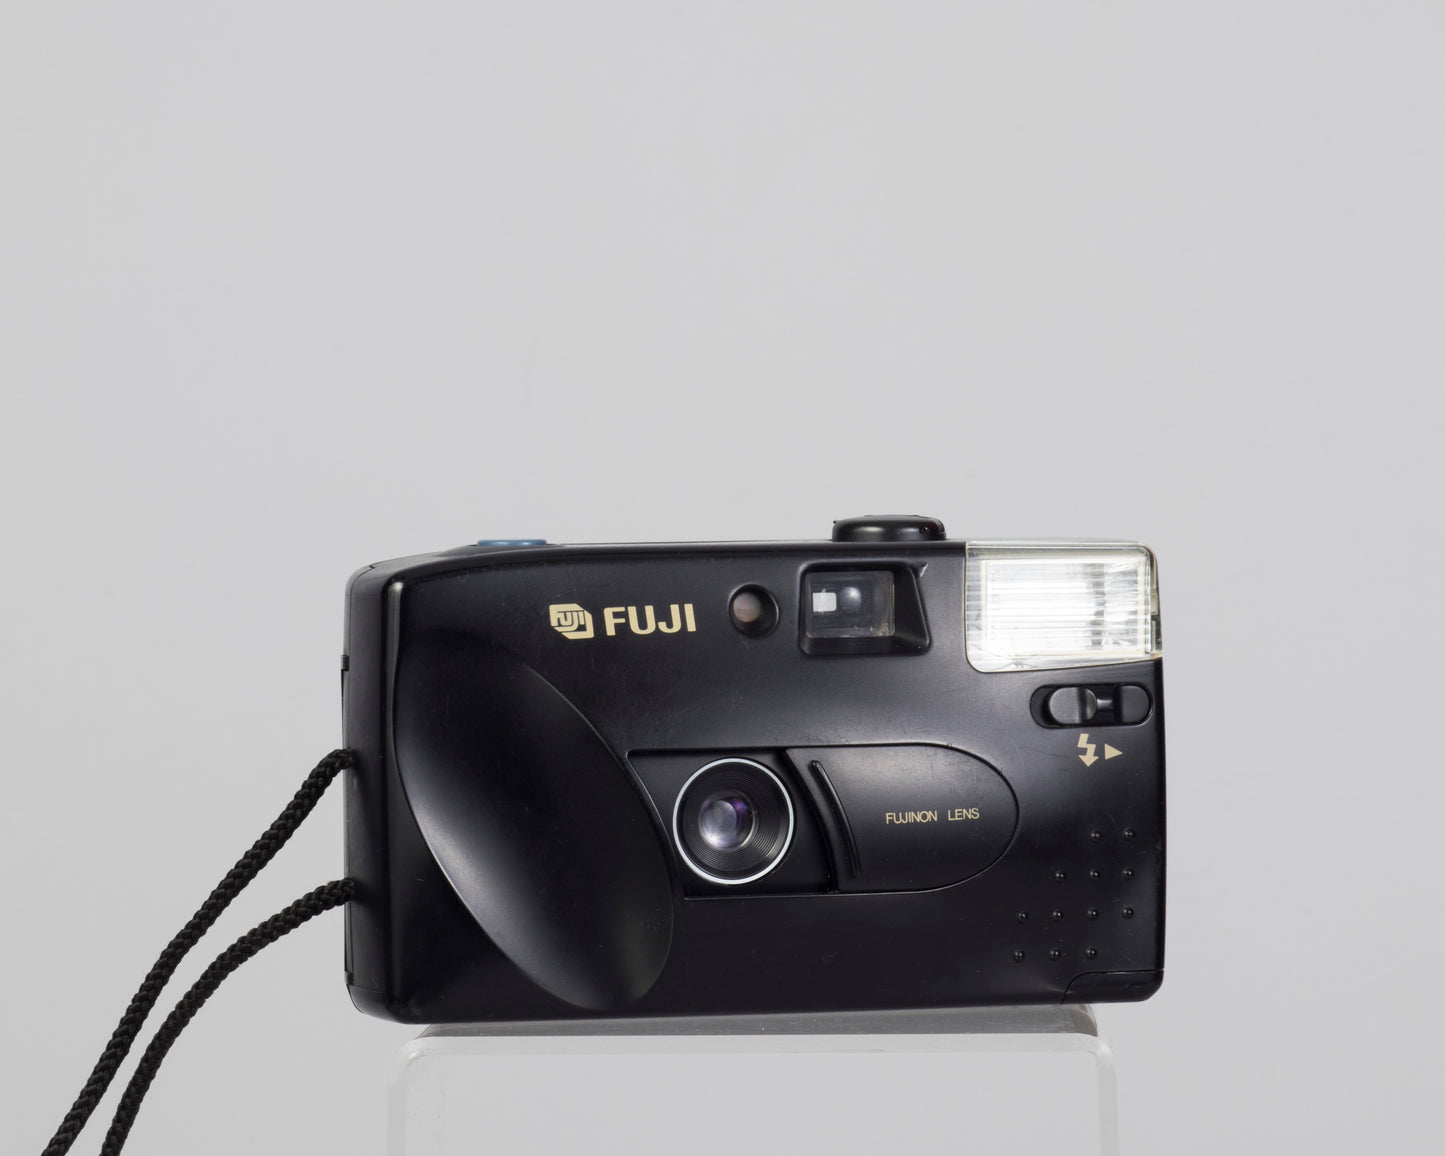 The Fujifilm DL-8 (aka DL-7 Plus) is a basic compact 35mm film camera